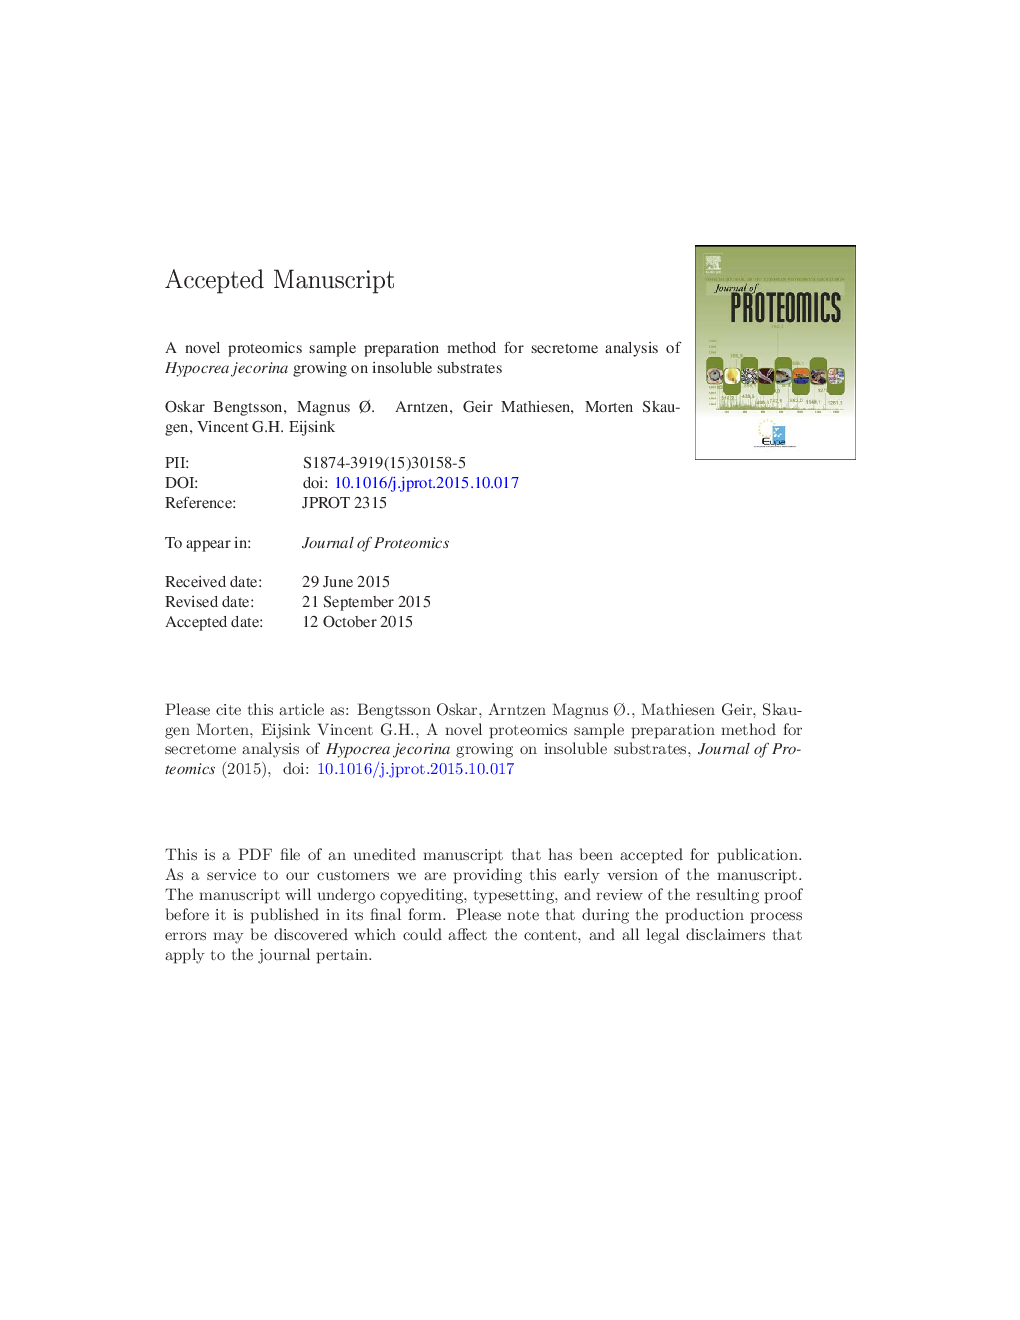 A novel proteomics sample preparation method for secretome analysis of Hypocrea jecorina growing on insoluble substrates